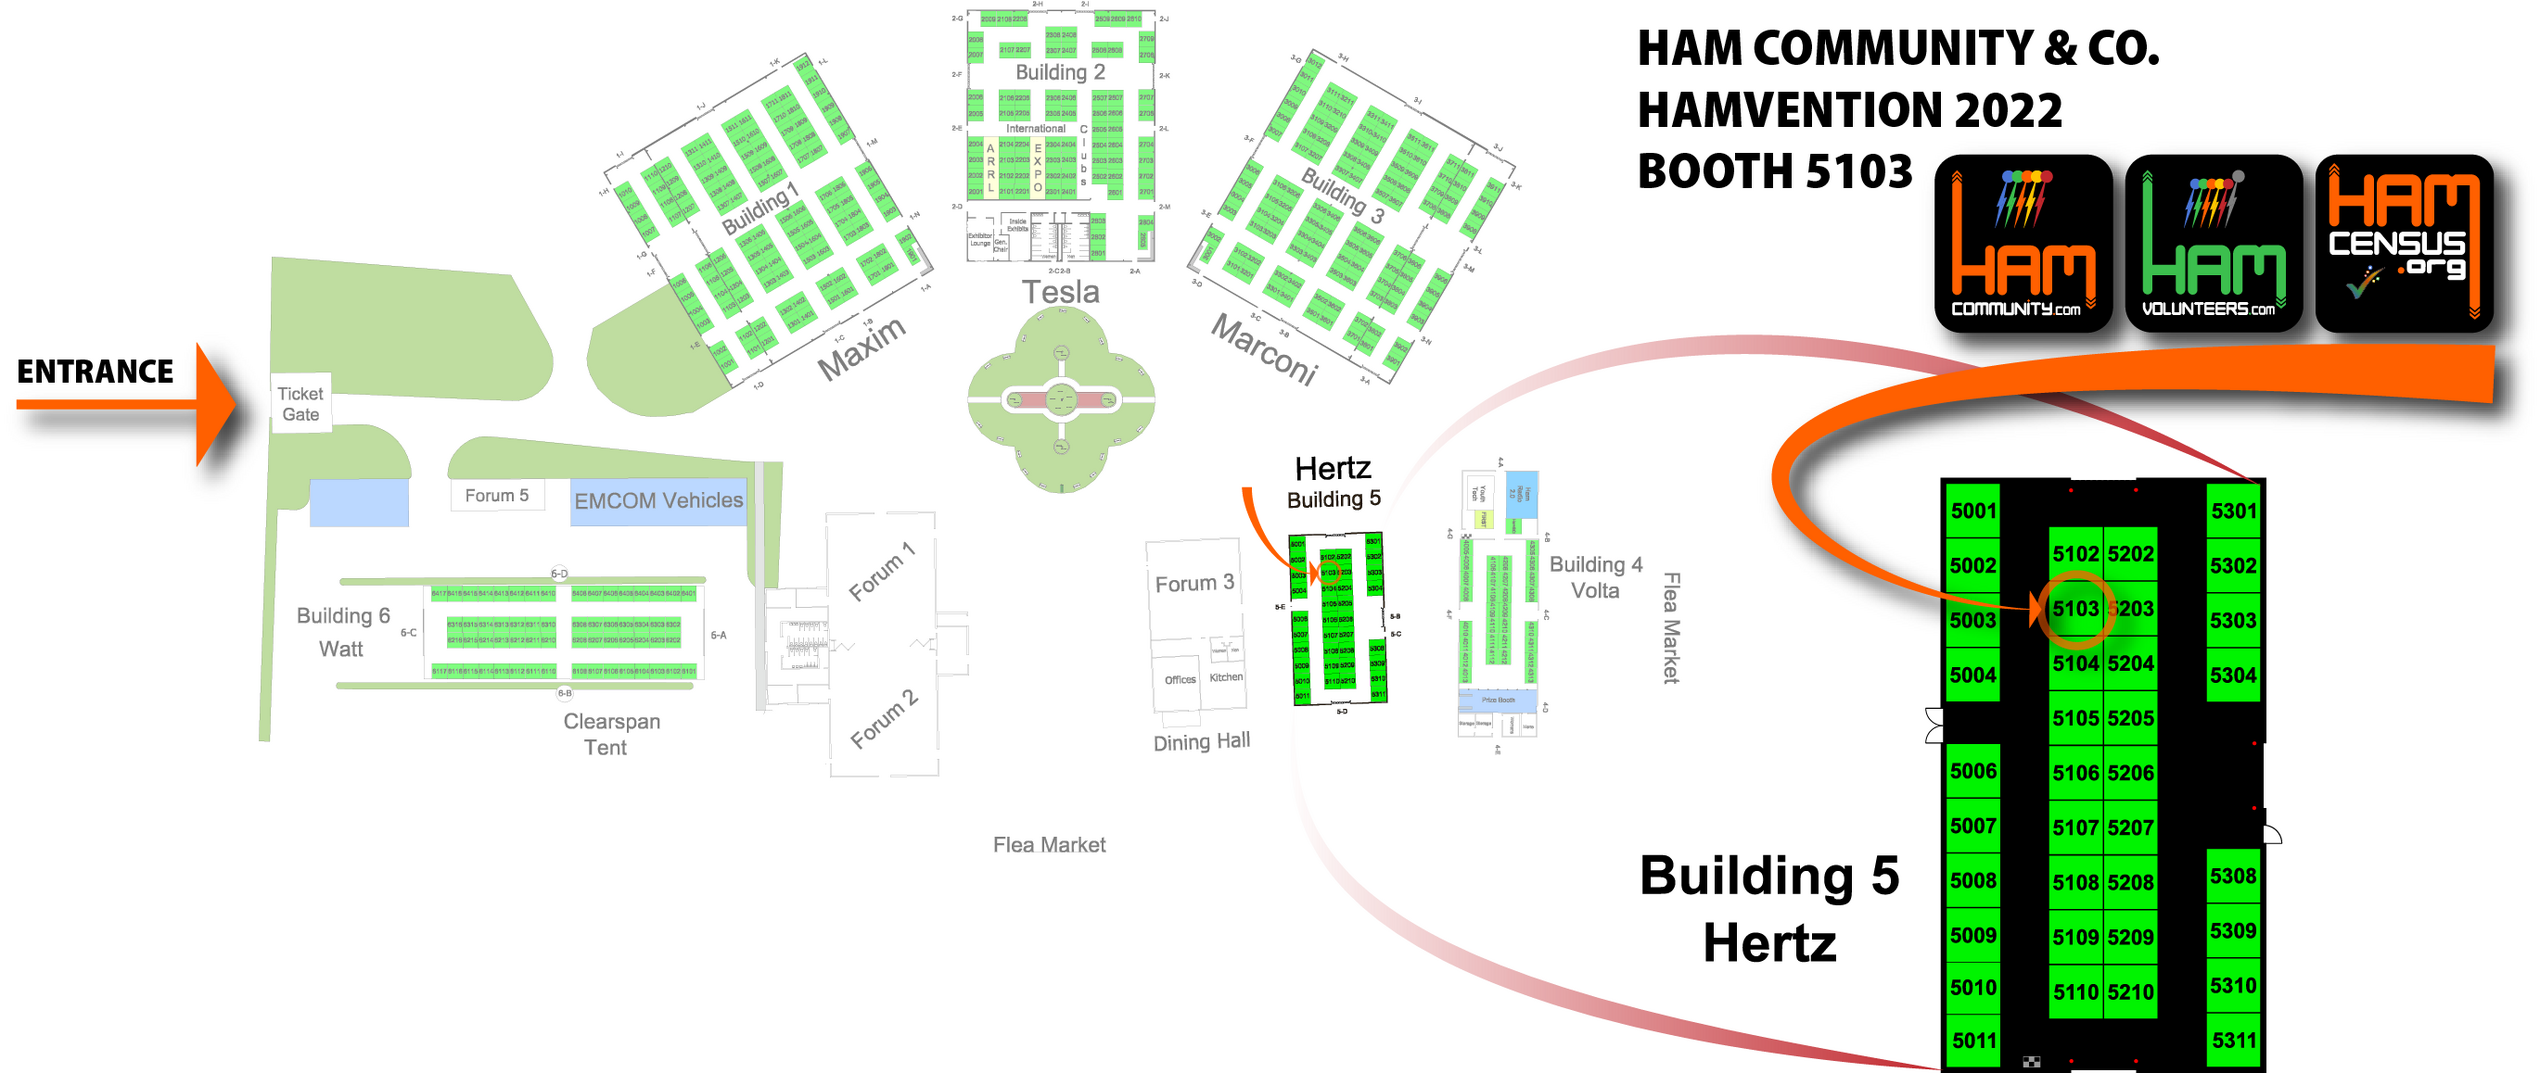 Ham Community at Hamvention 2022